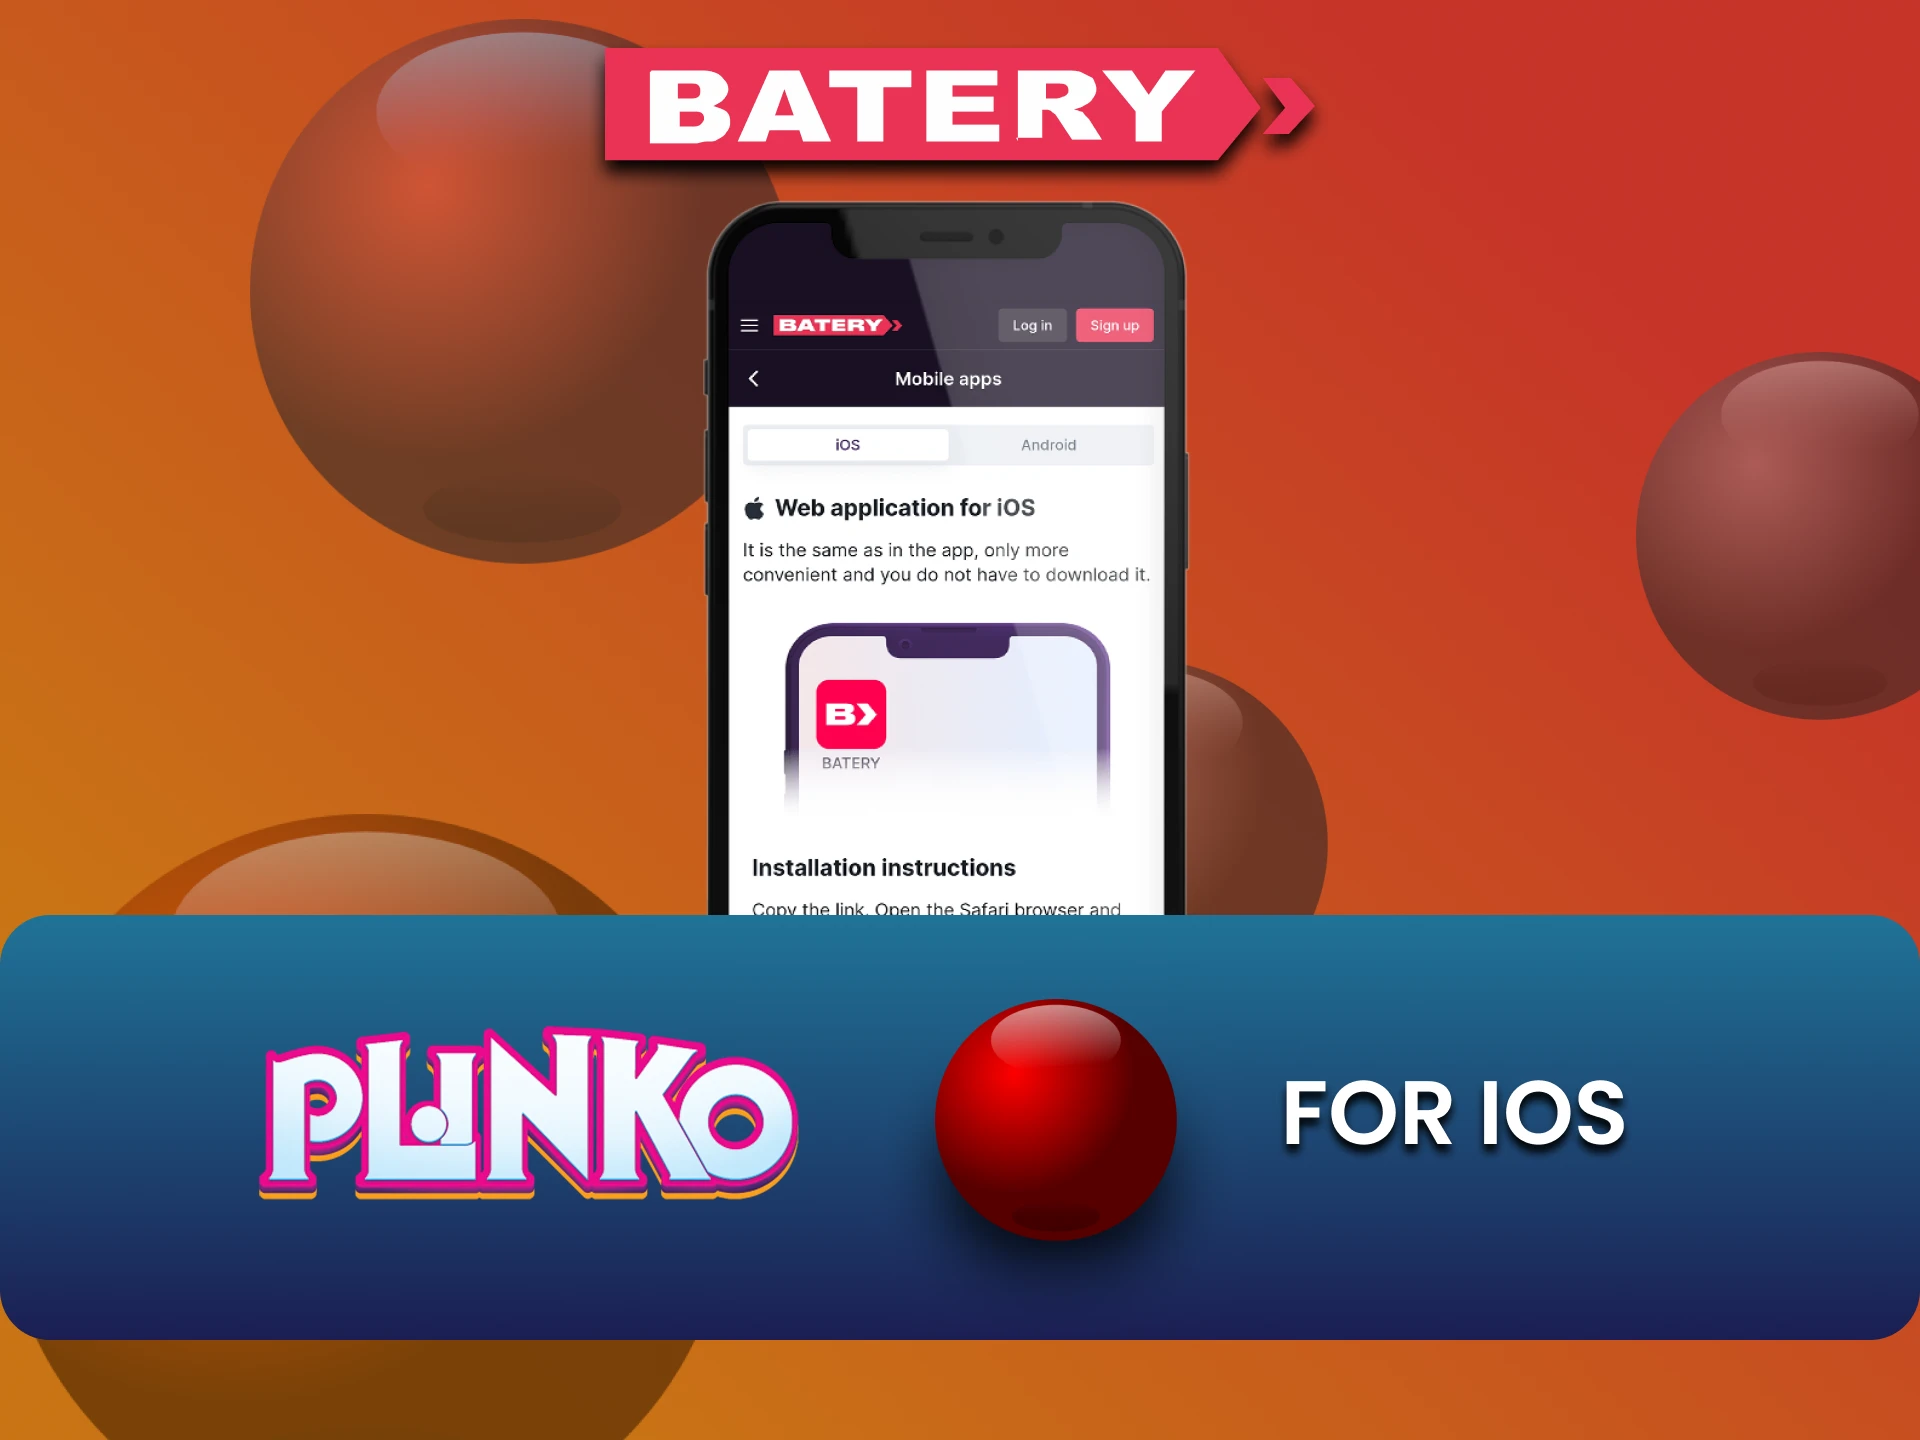 Install the Batery app on iOS to play Plinko.